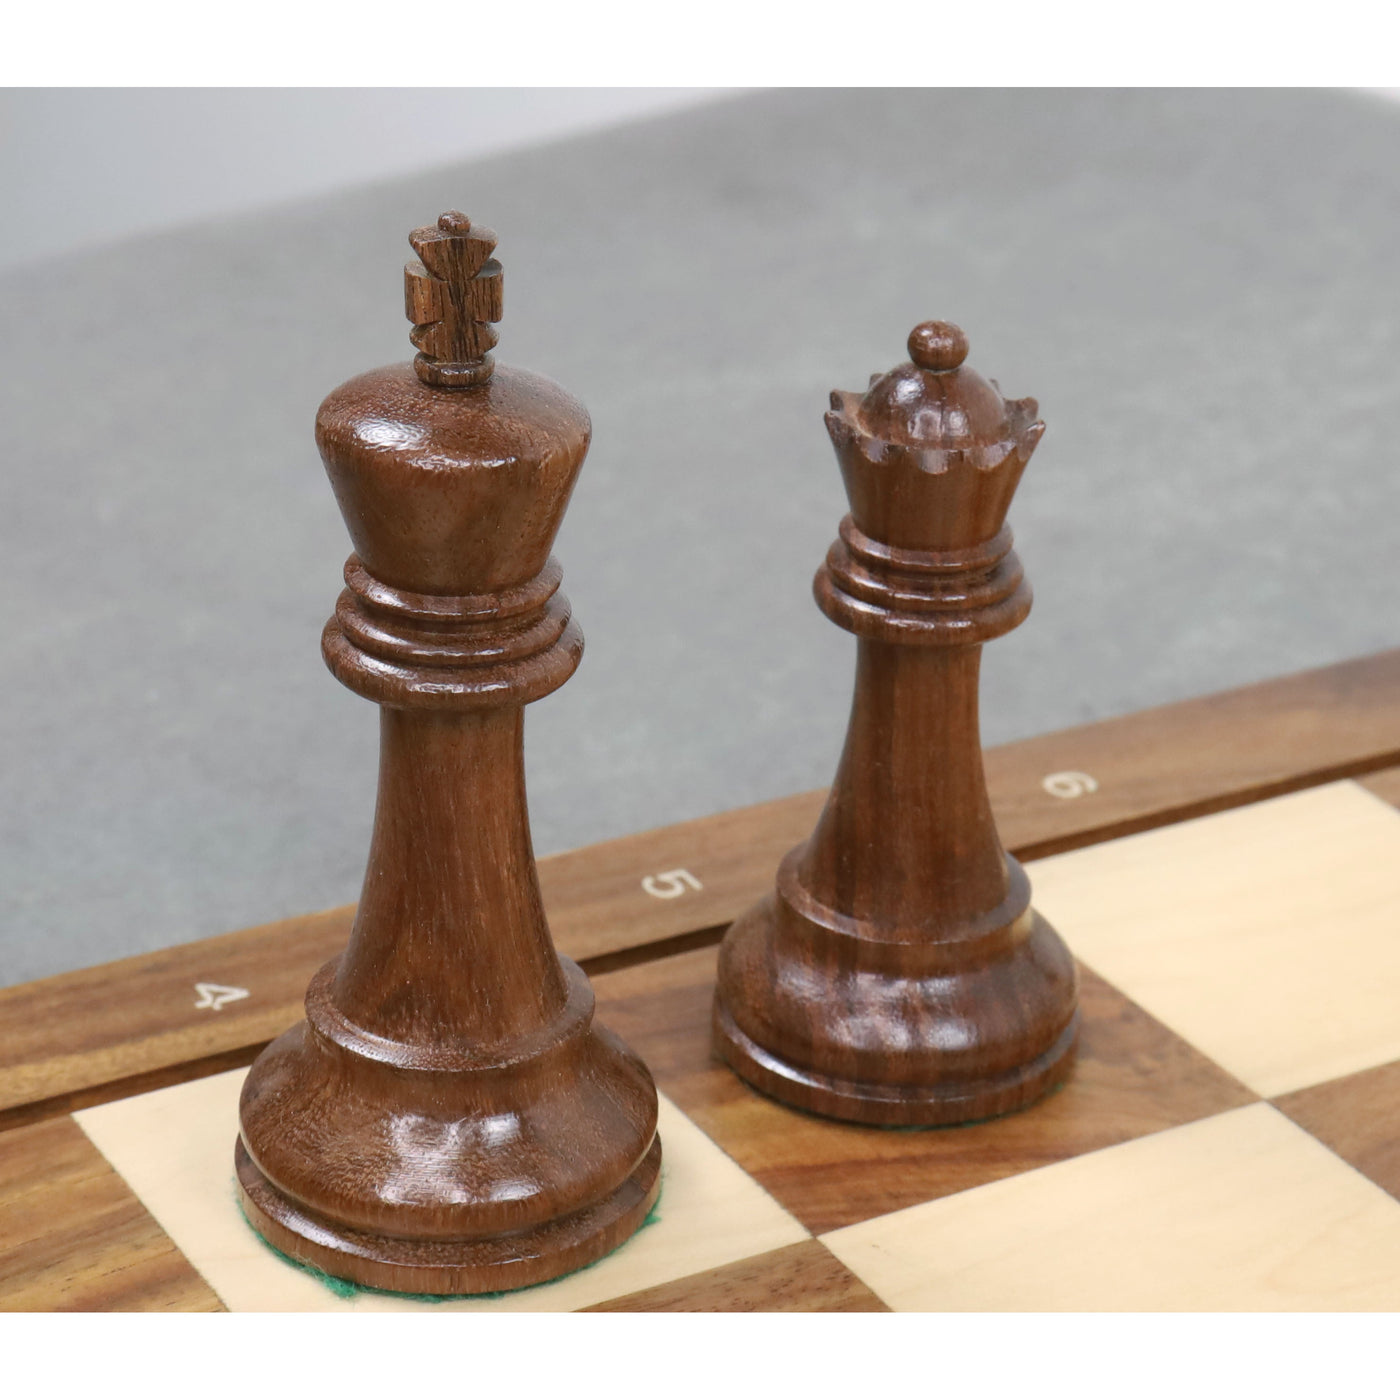 Leningrad Staunton Chess Set - Chess Pieces Only - Golden Rosewood & Boxwood - 4" King